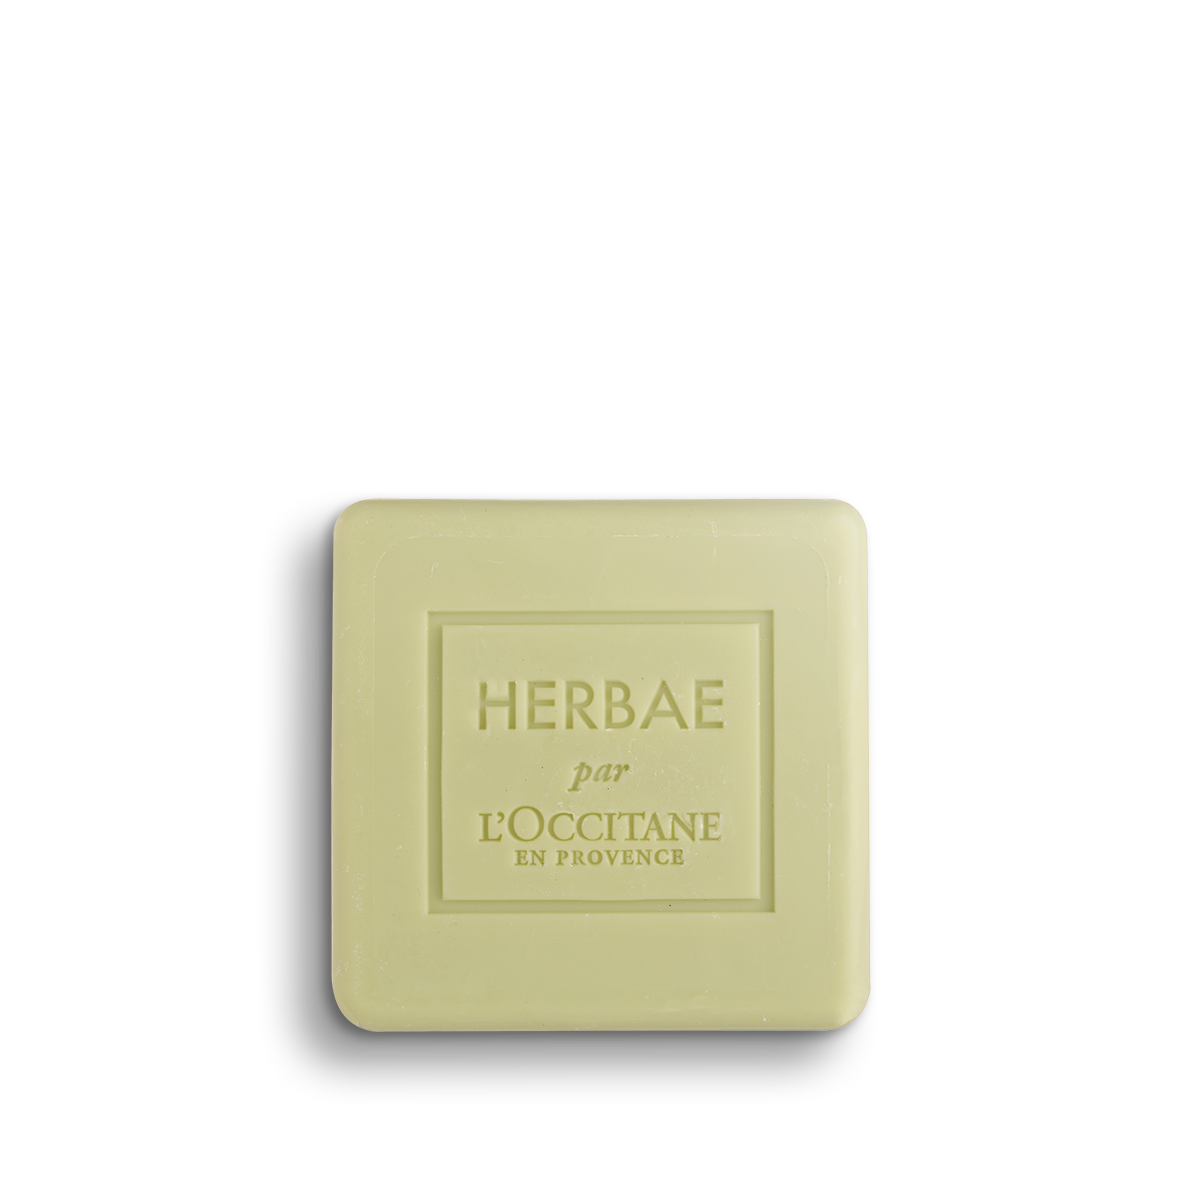 Sabonete Perfumado Herbae Par L’Occitane 100g, , large image number 1